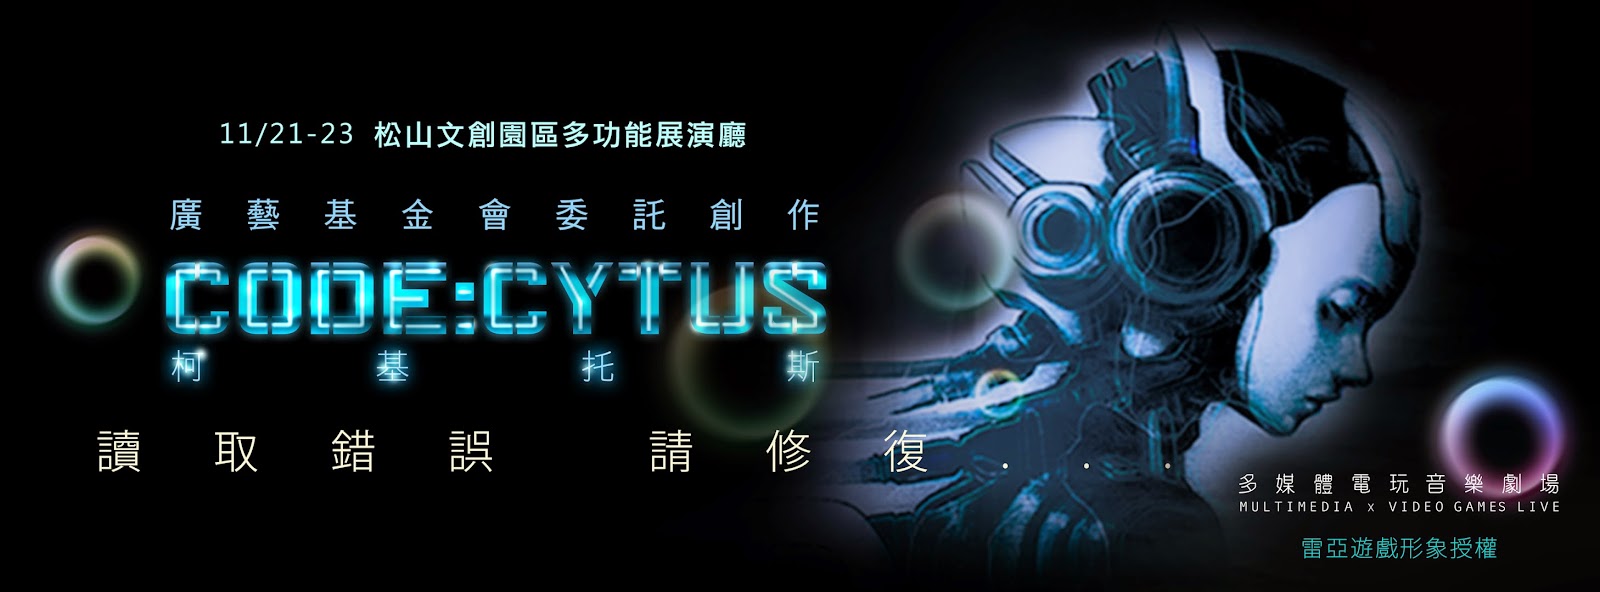 Code:Cytus